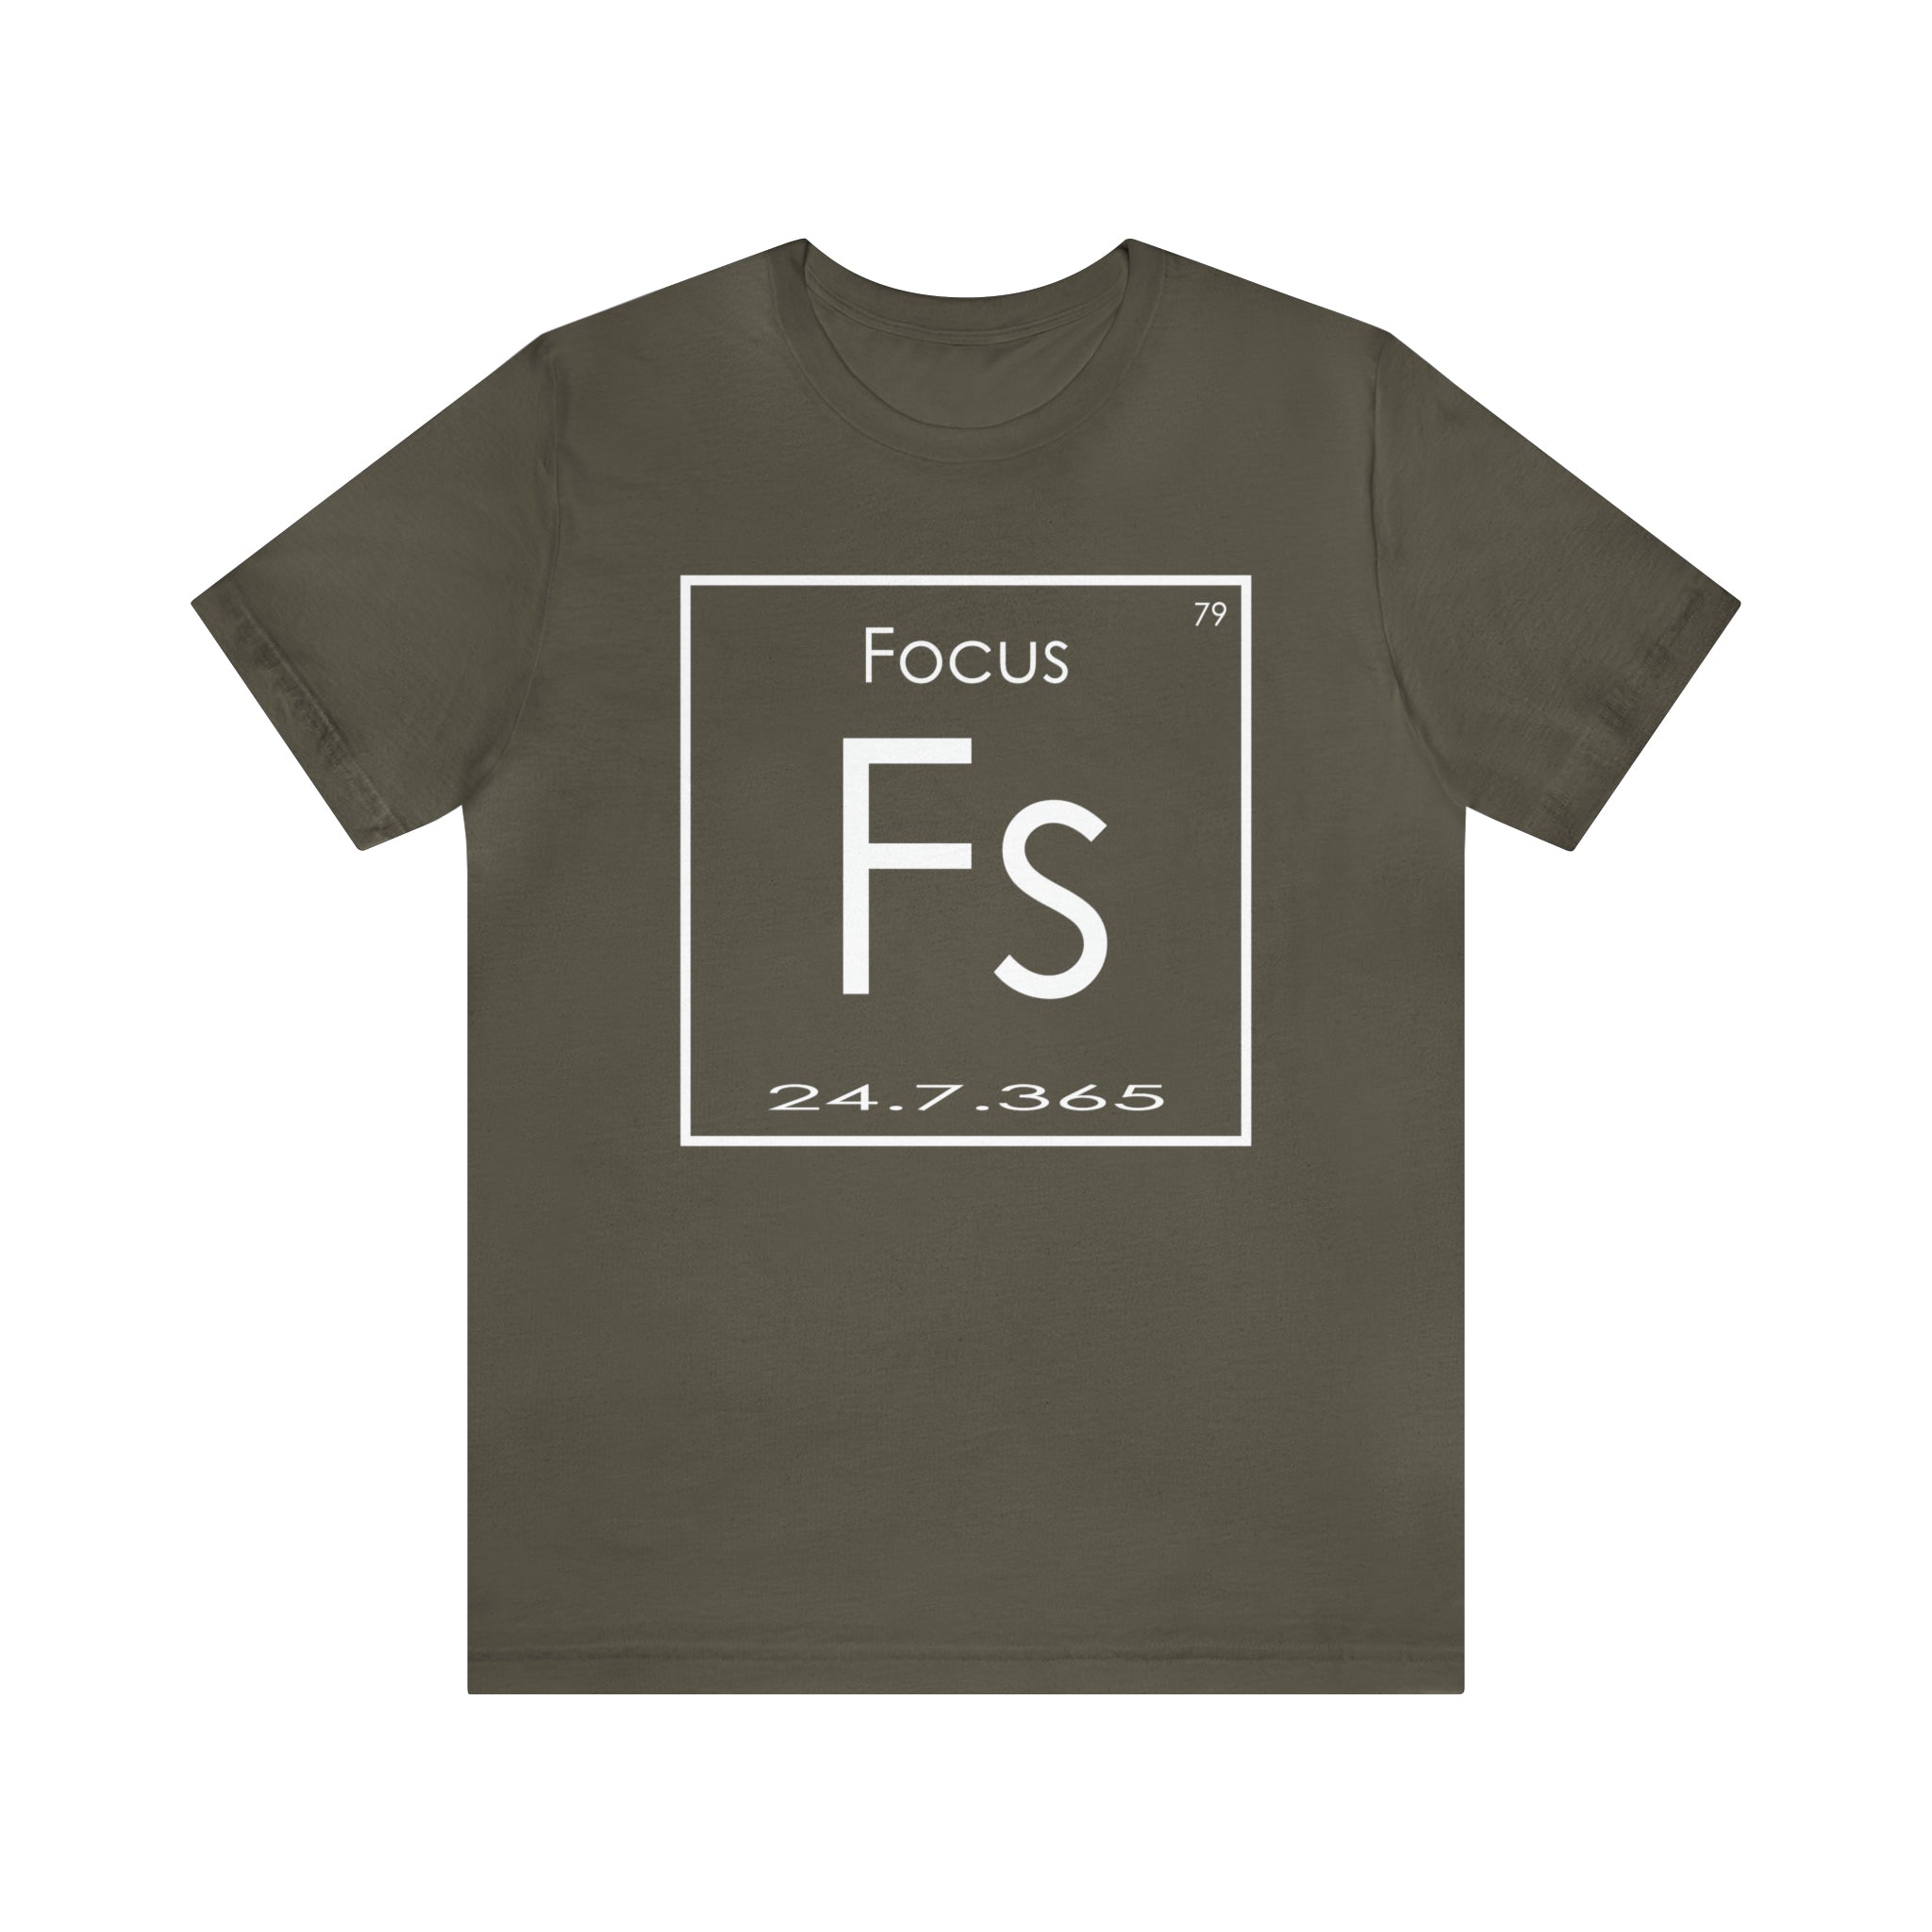 Focus Element - Jersey Short Sleeve Tee